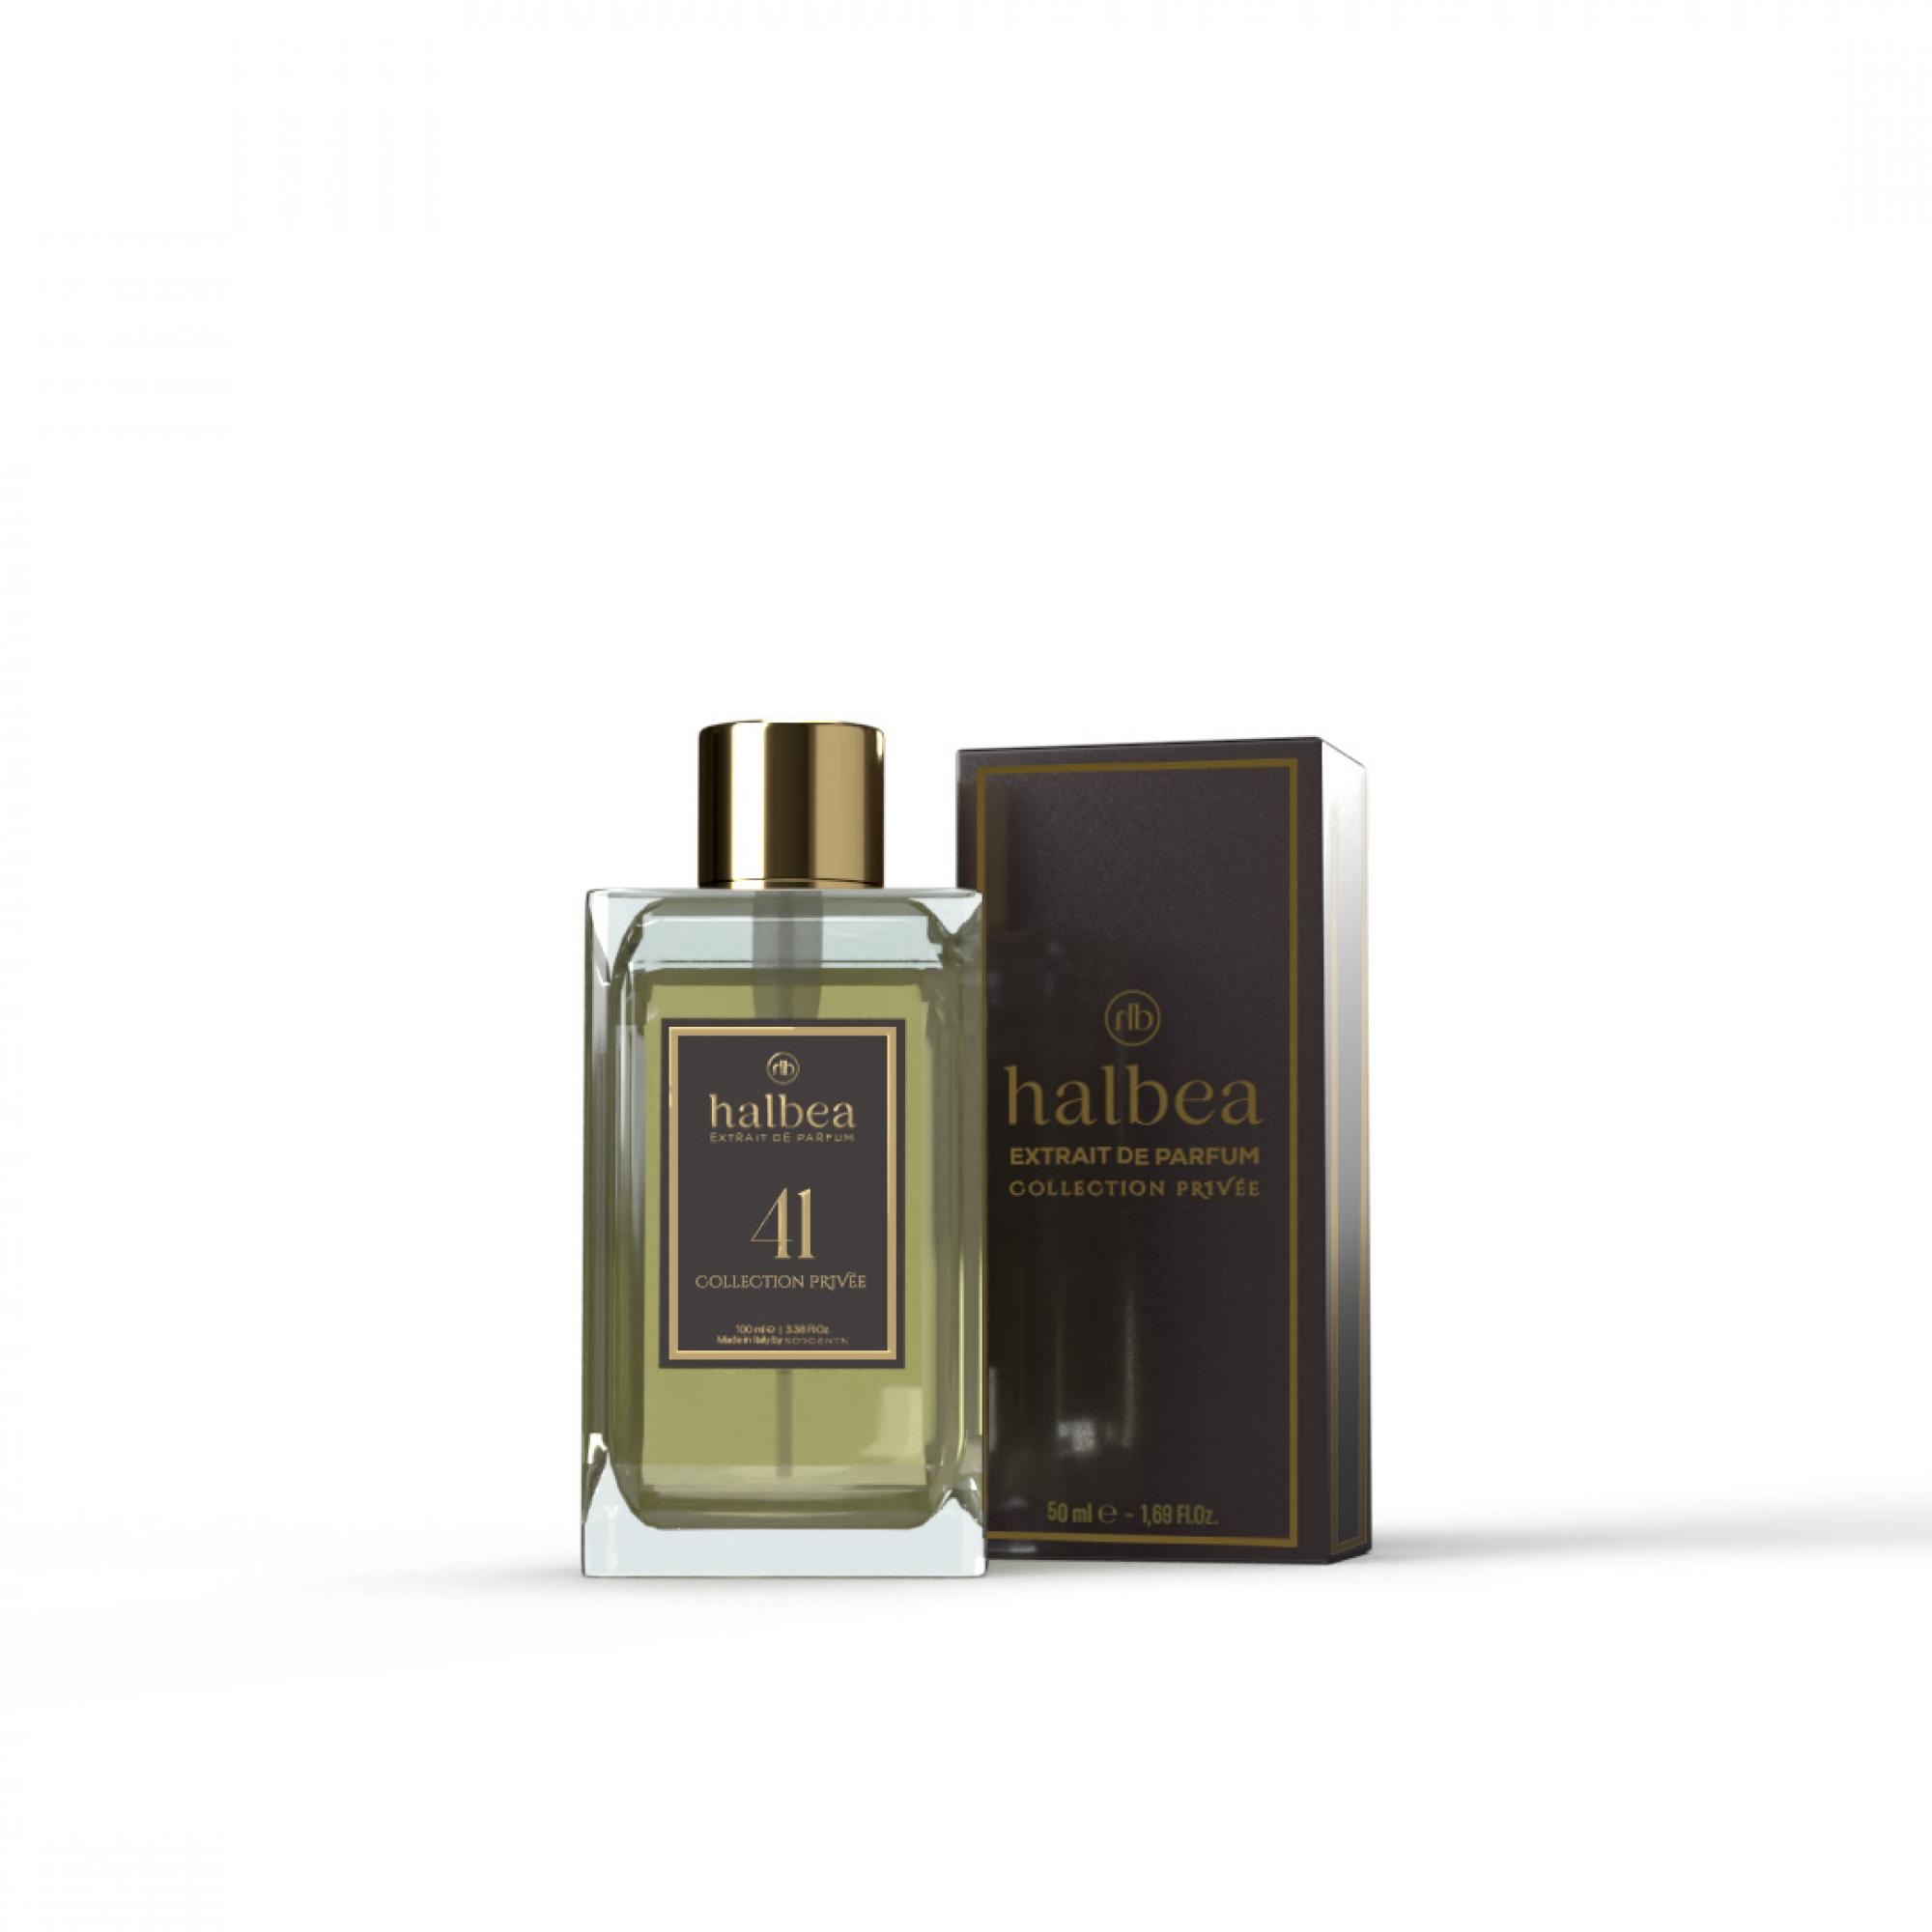 Halbea Parfum Nr. 41 insp. by Black Afgano - Nasomatto 50ml